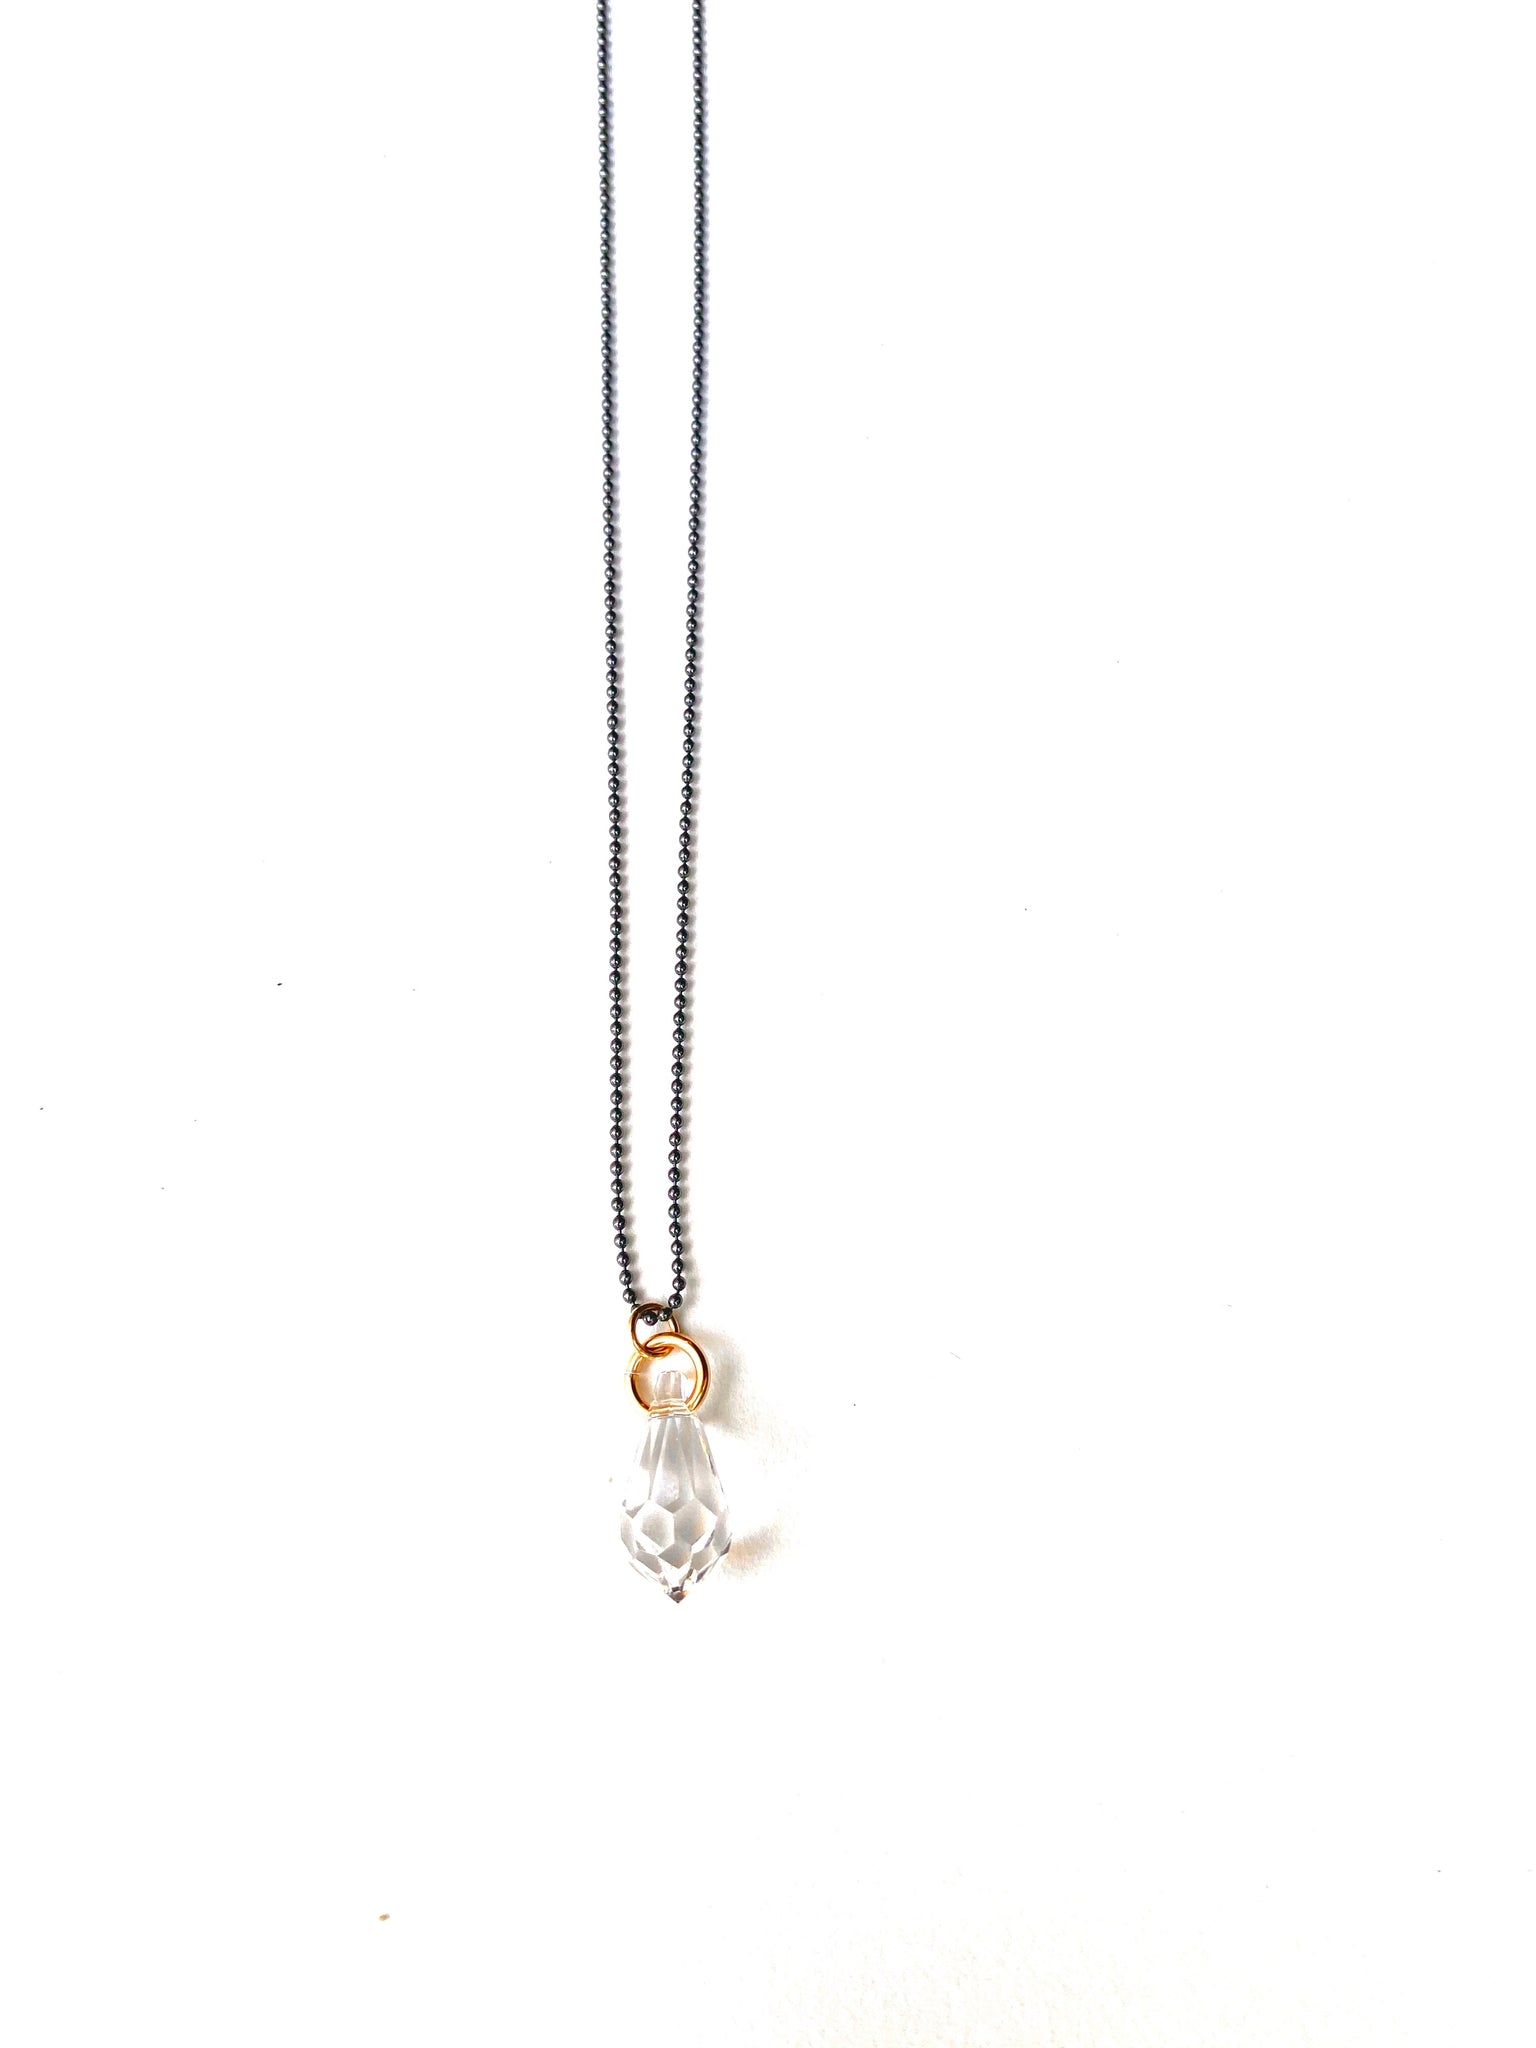 Wynn - sterling silver necklace with Swarovski crystal drop